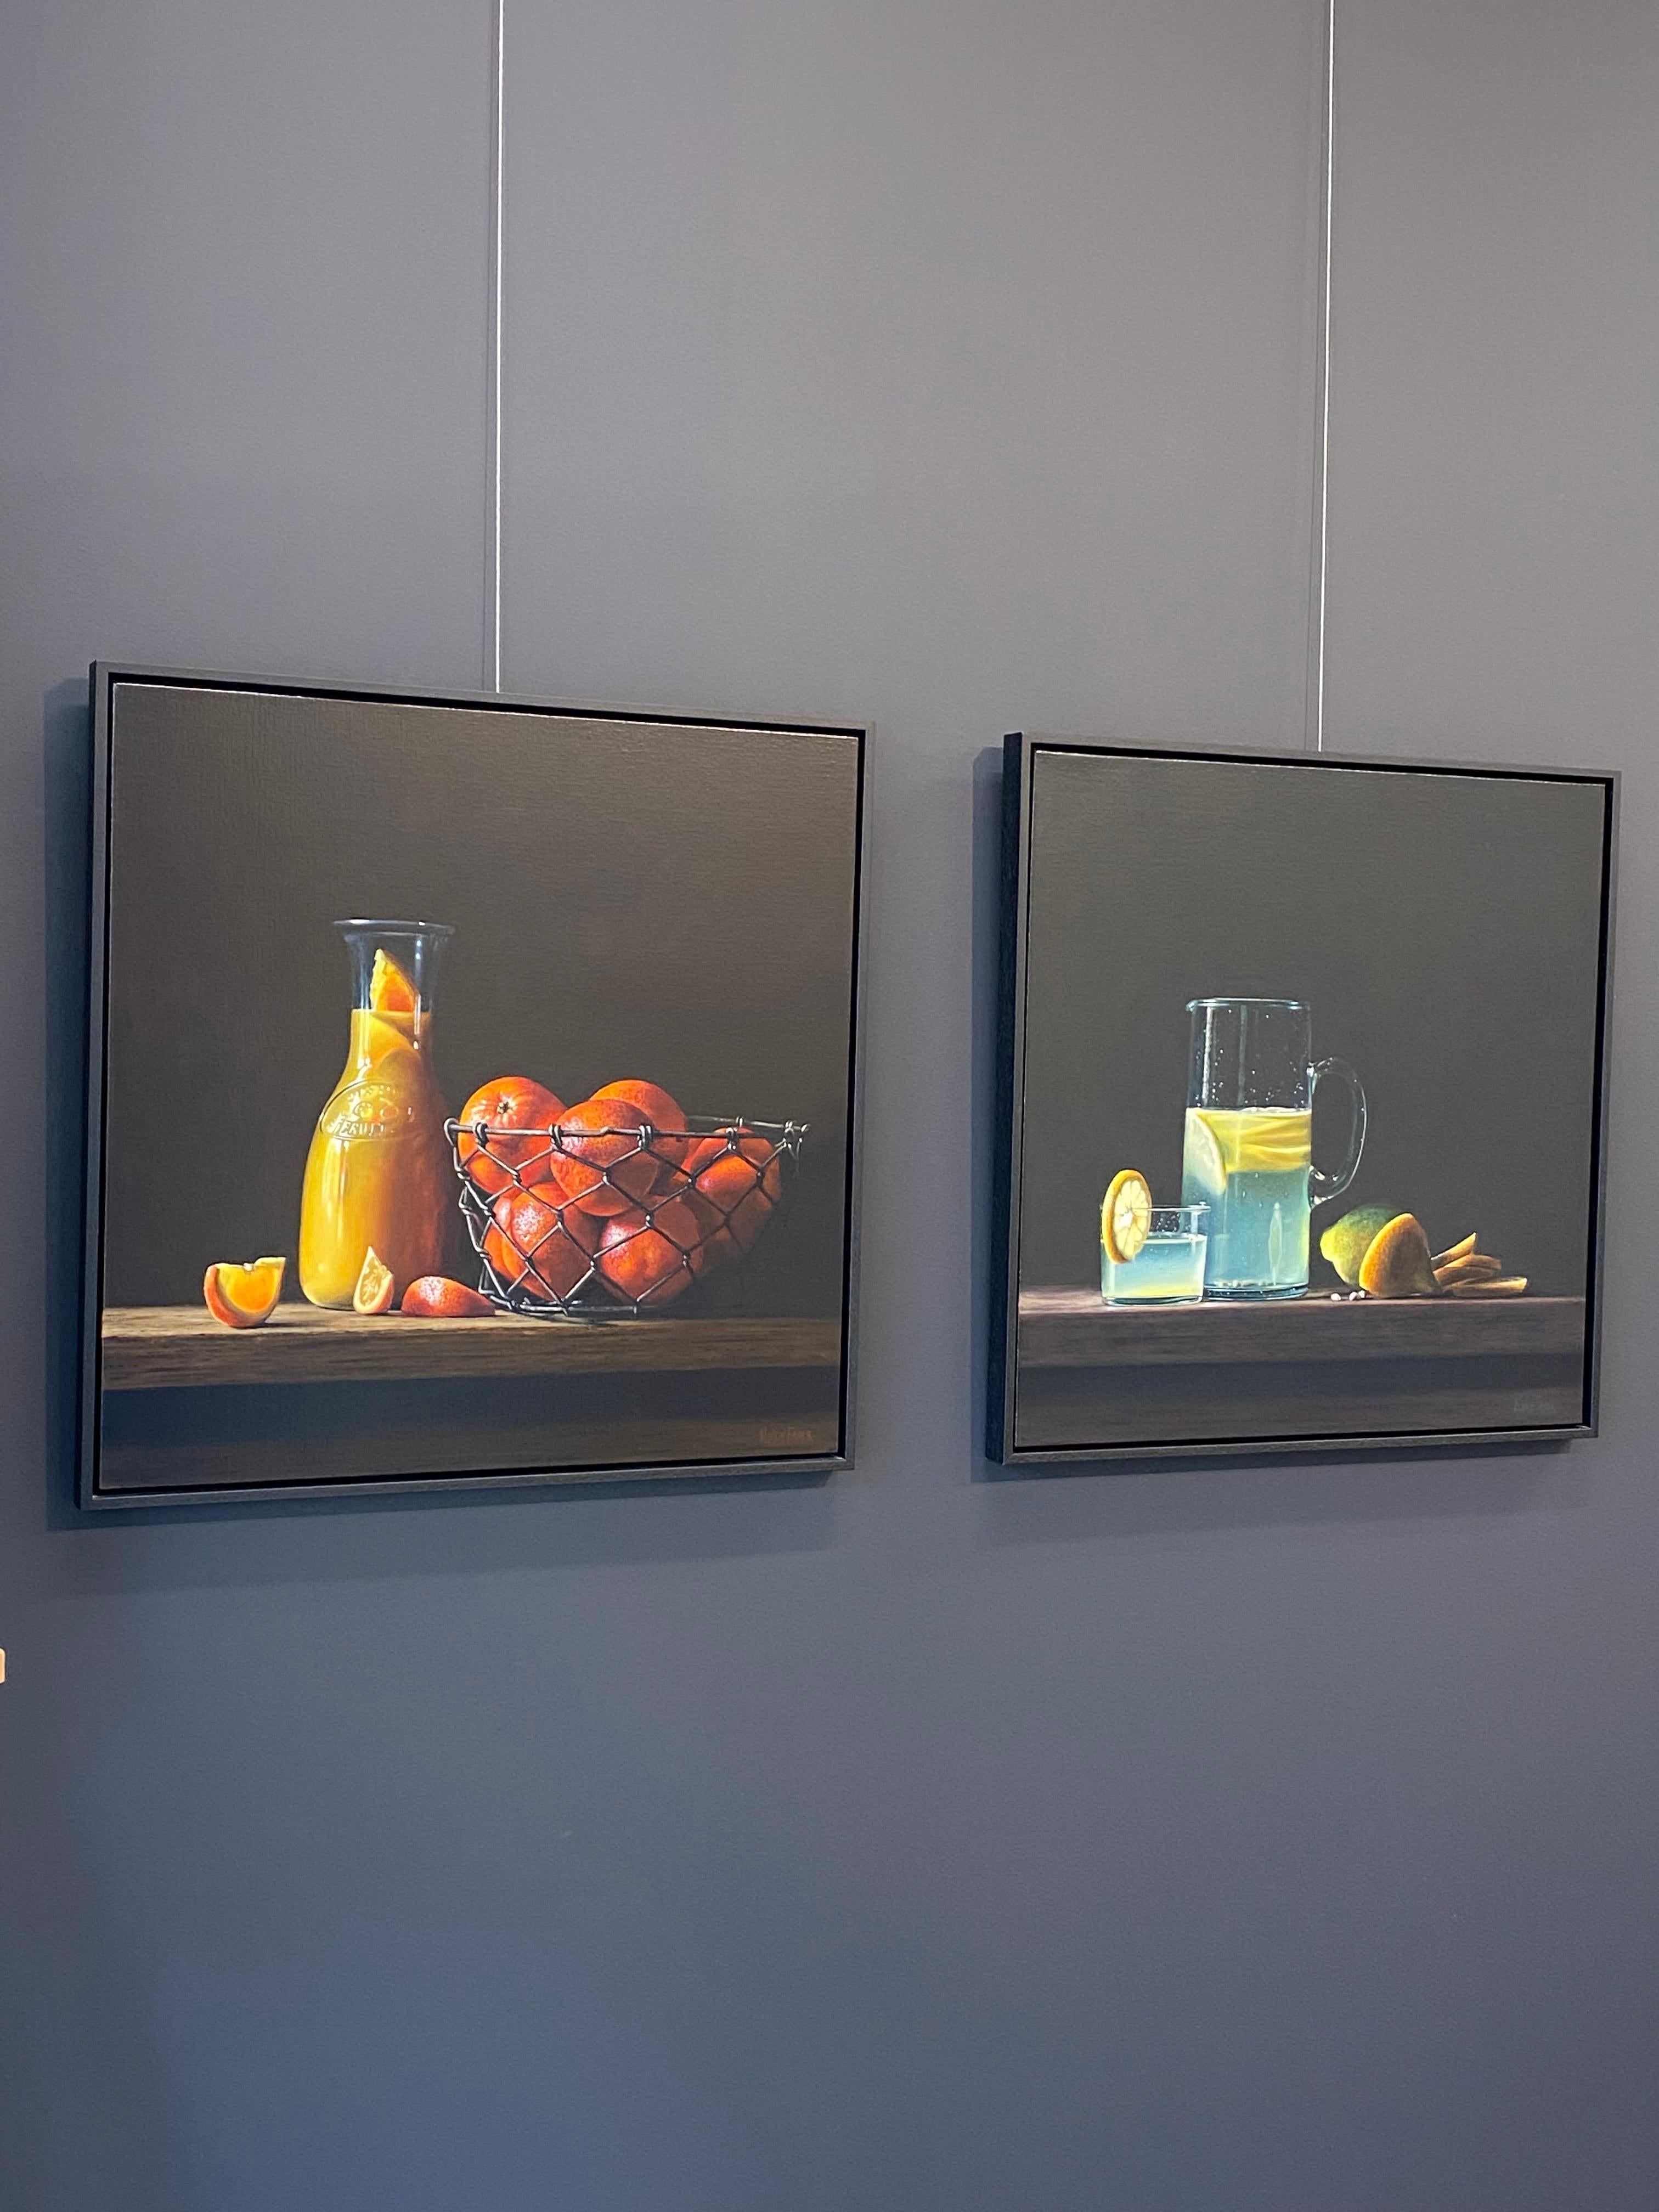 Oranges in a Basket-21st Contemporary Dutch Stilllife painting with Orange-juice - Black Still-Life Painting by Heidi von Faber